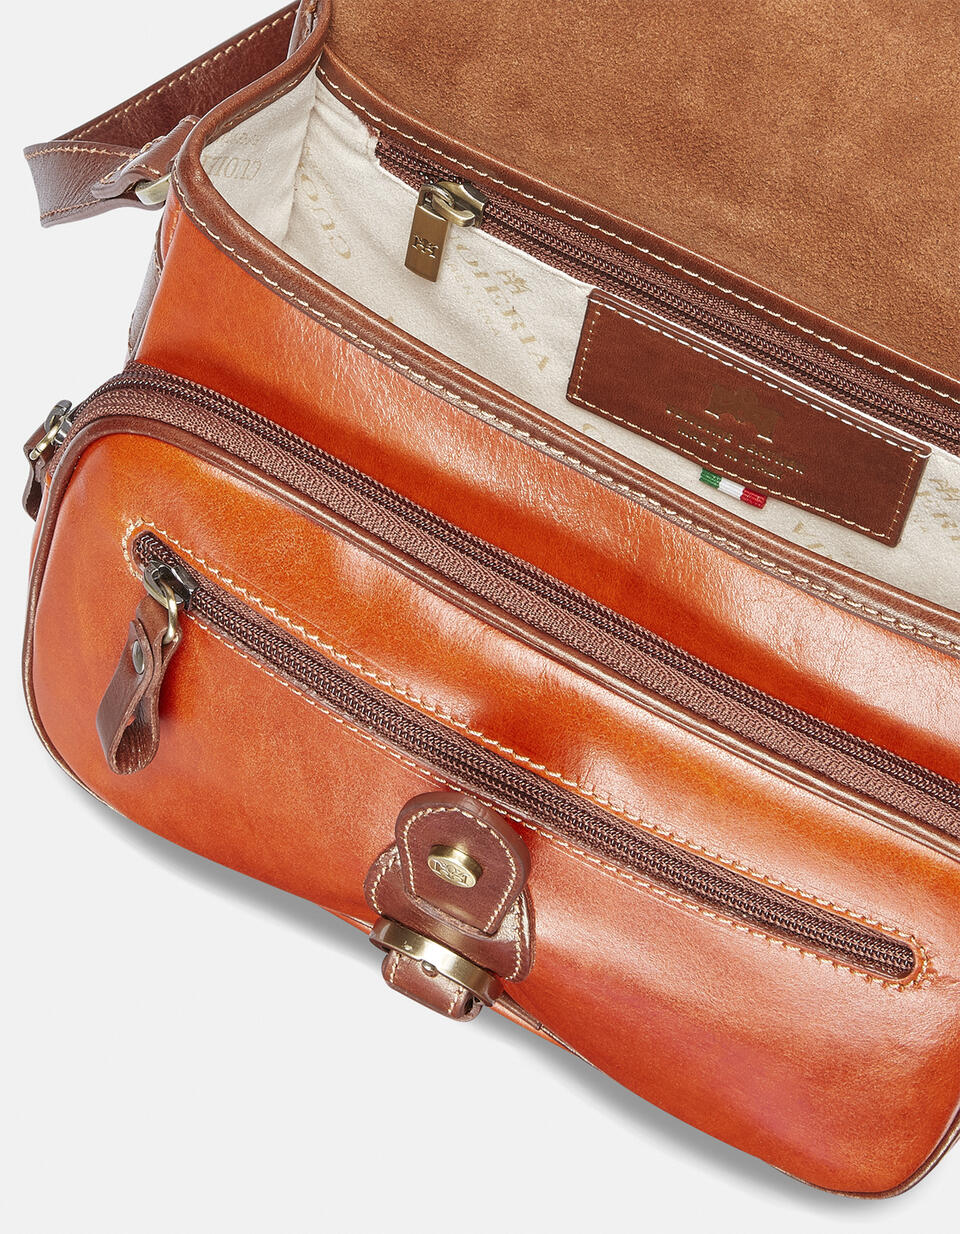 Leather Messenger bag - Messenger Bags - WOMEN'S BAGS | bags ARANCIOBICOLORE - Messenger Bags - WOMEN'S BAGS | bagsCuoieria Fiorentina